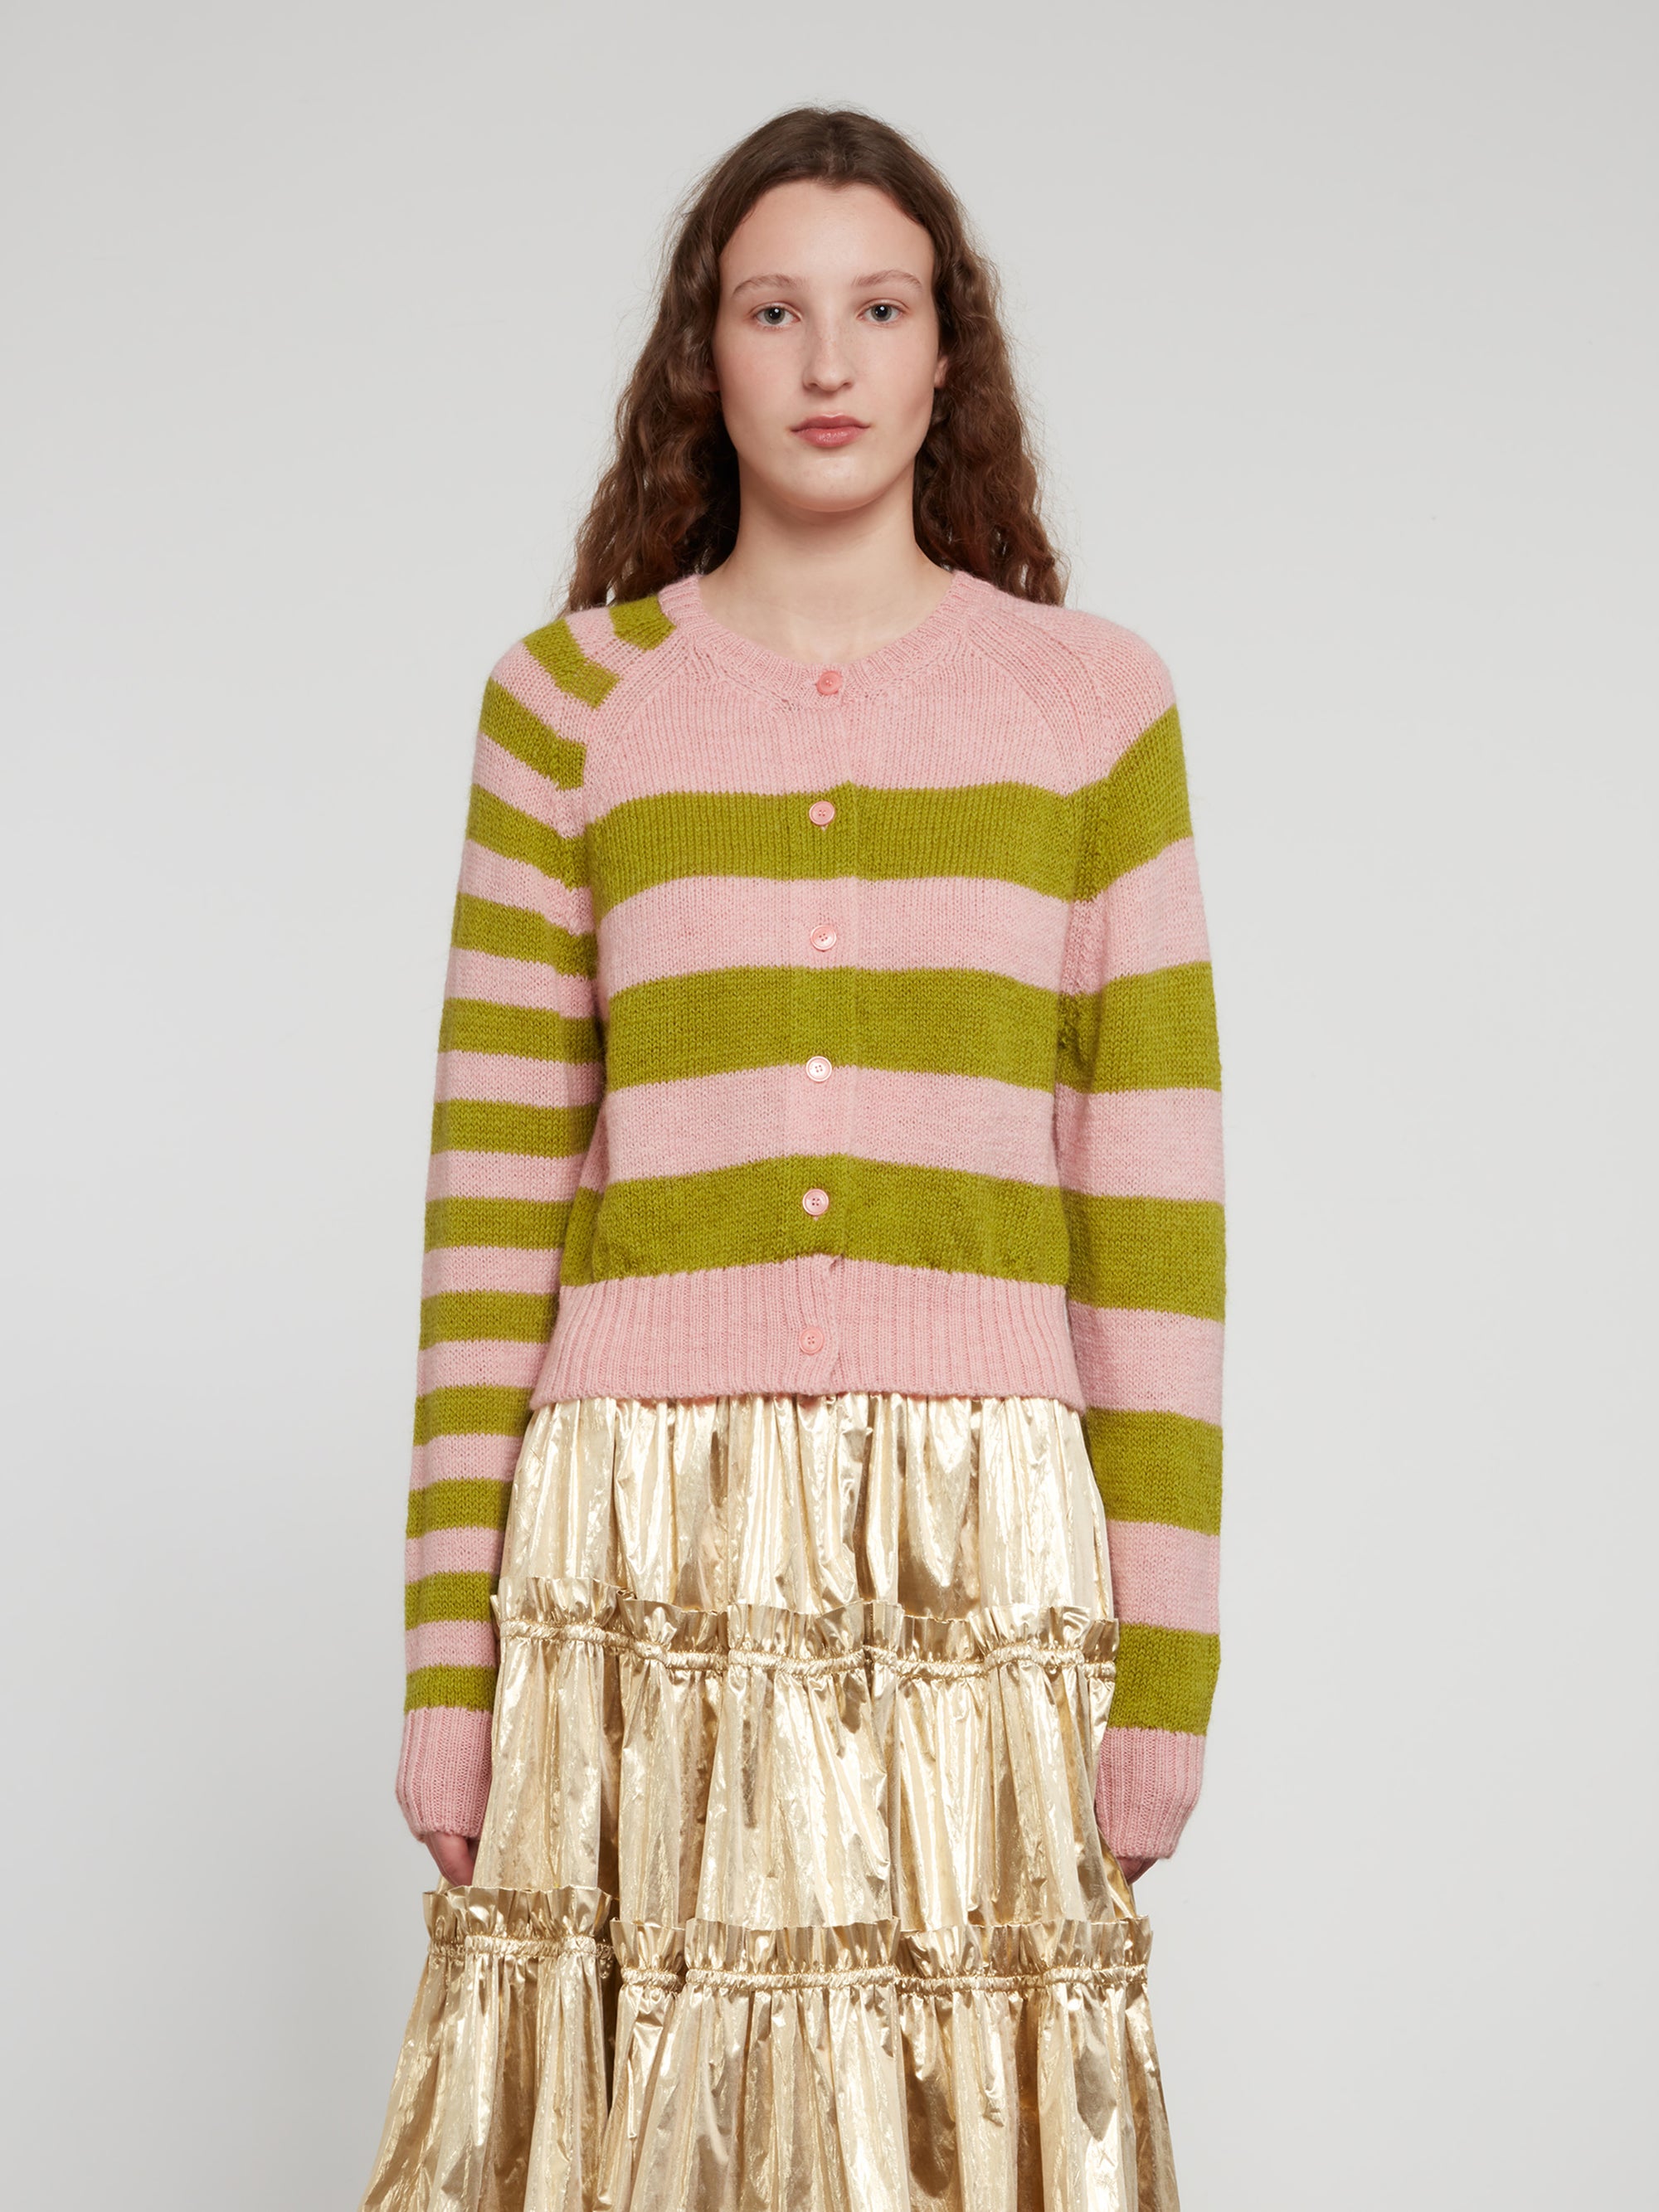 Molly Goddard - Women’s Lambswool Striped Cardigan - (Pink/Green) view 2